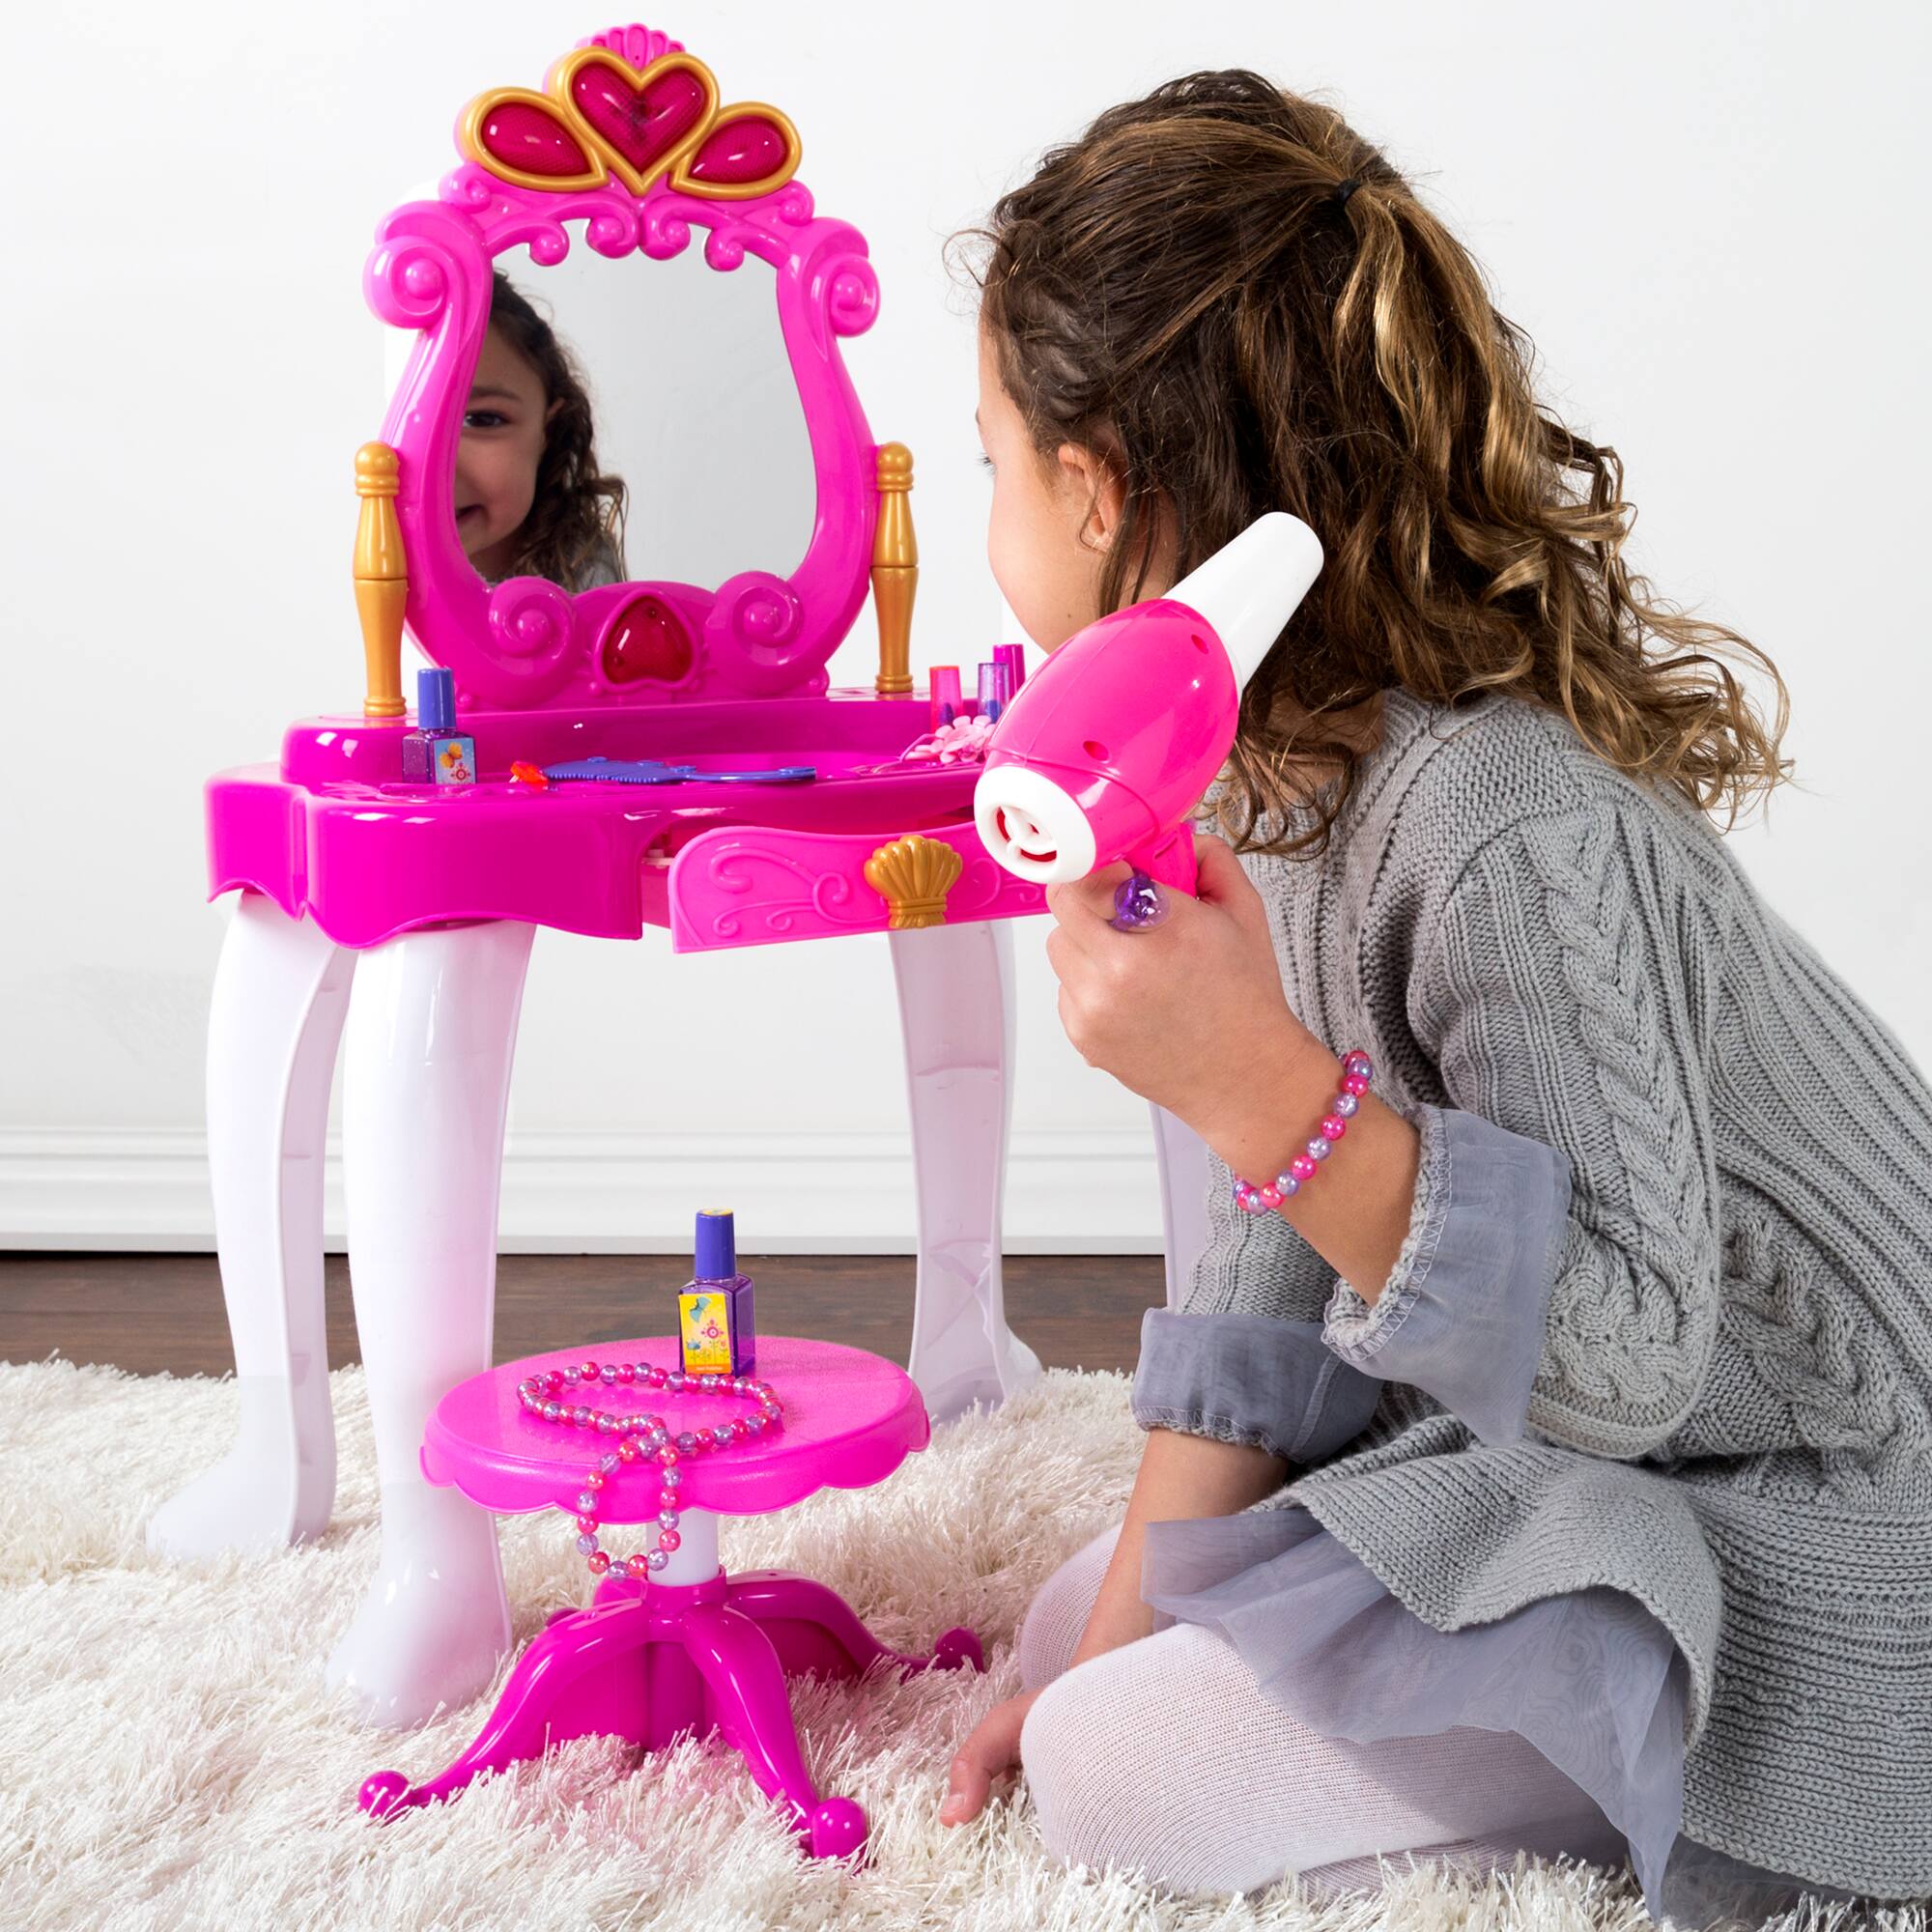 Toy Time Pretend Play Princess Vanity Toy Set